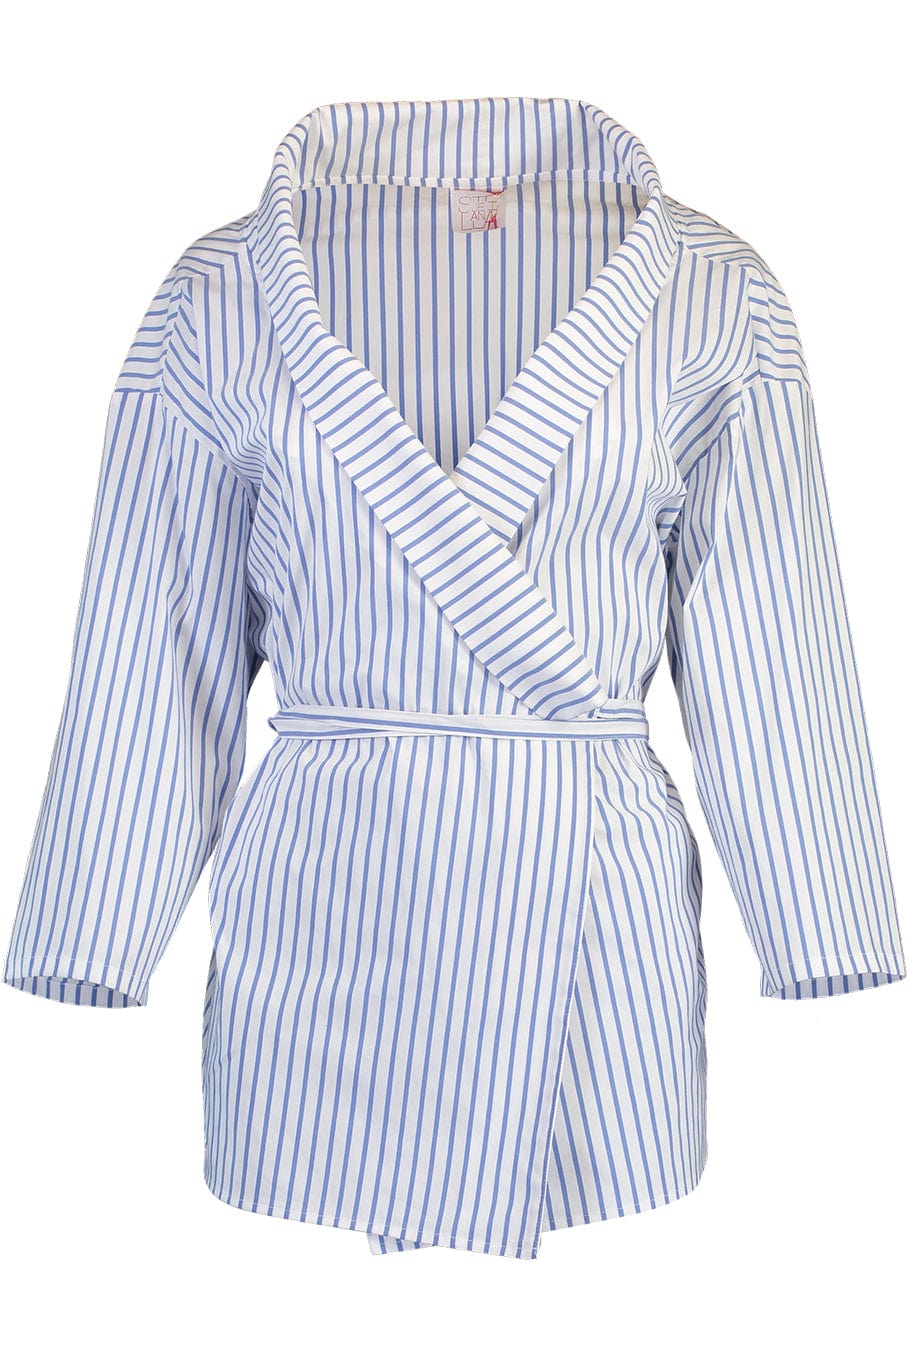 STELLA JEAN-Long Sleeve Stripe Wrap Style Blouse-